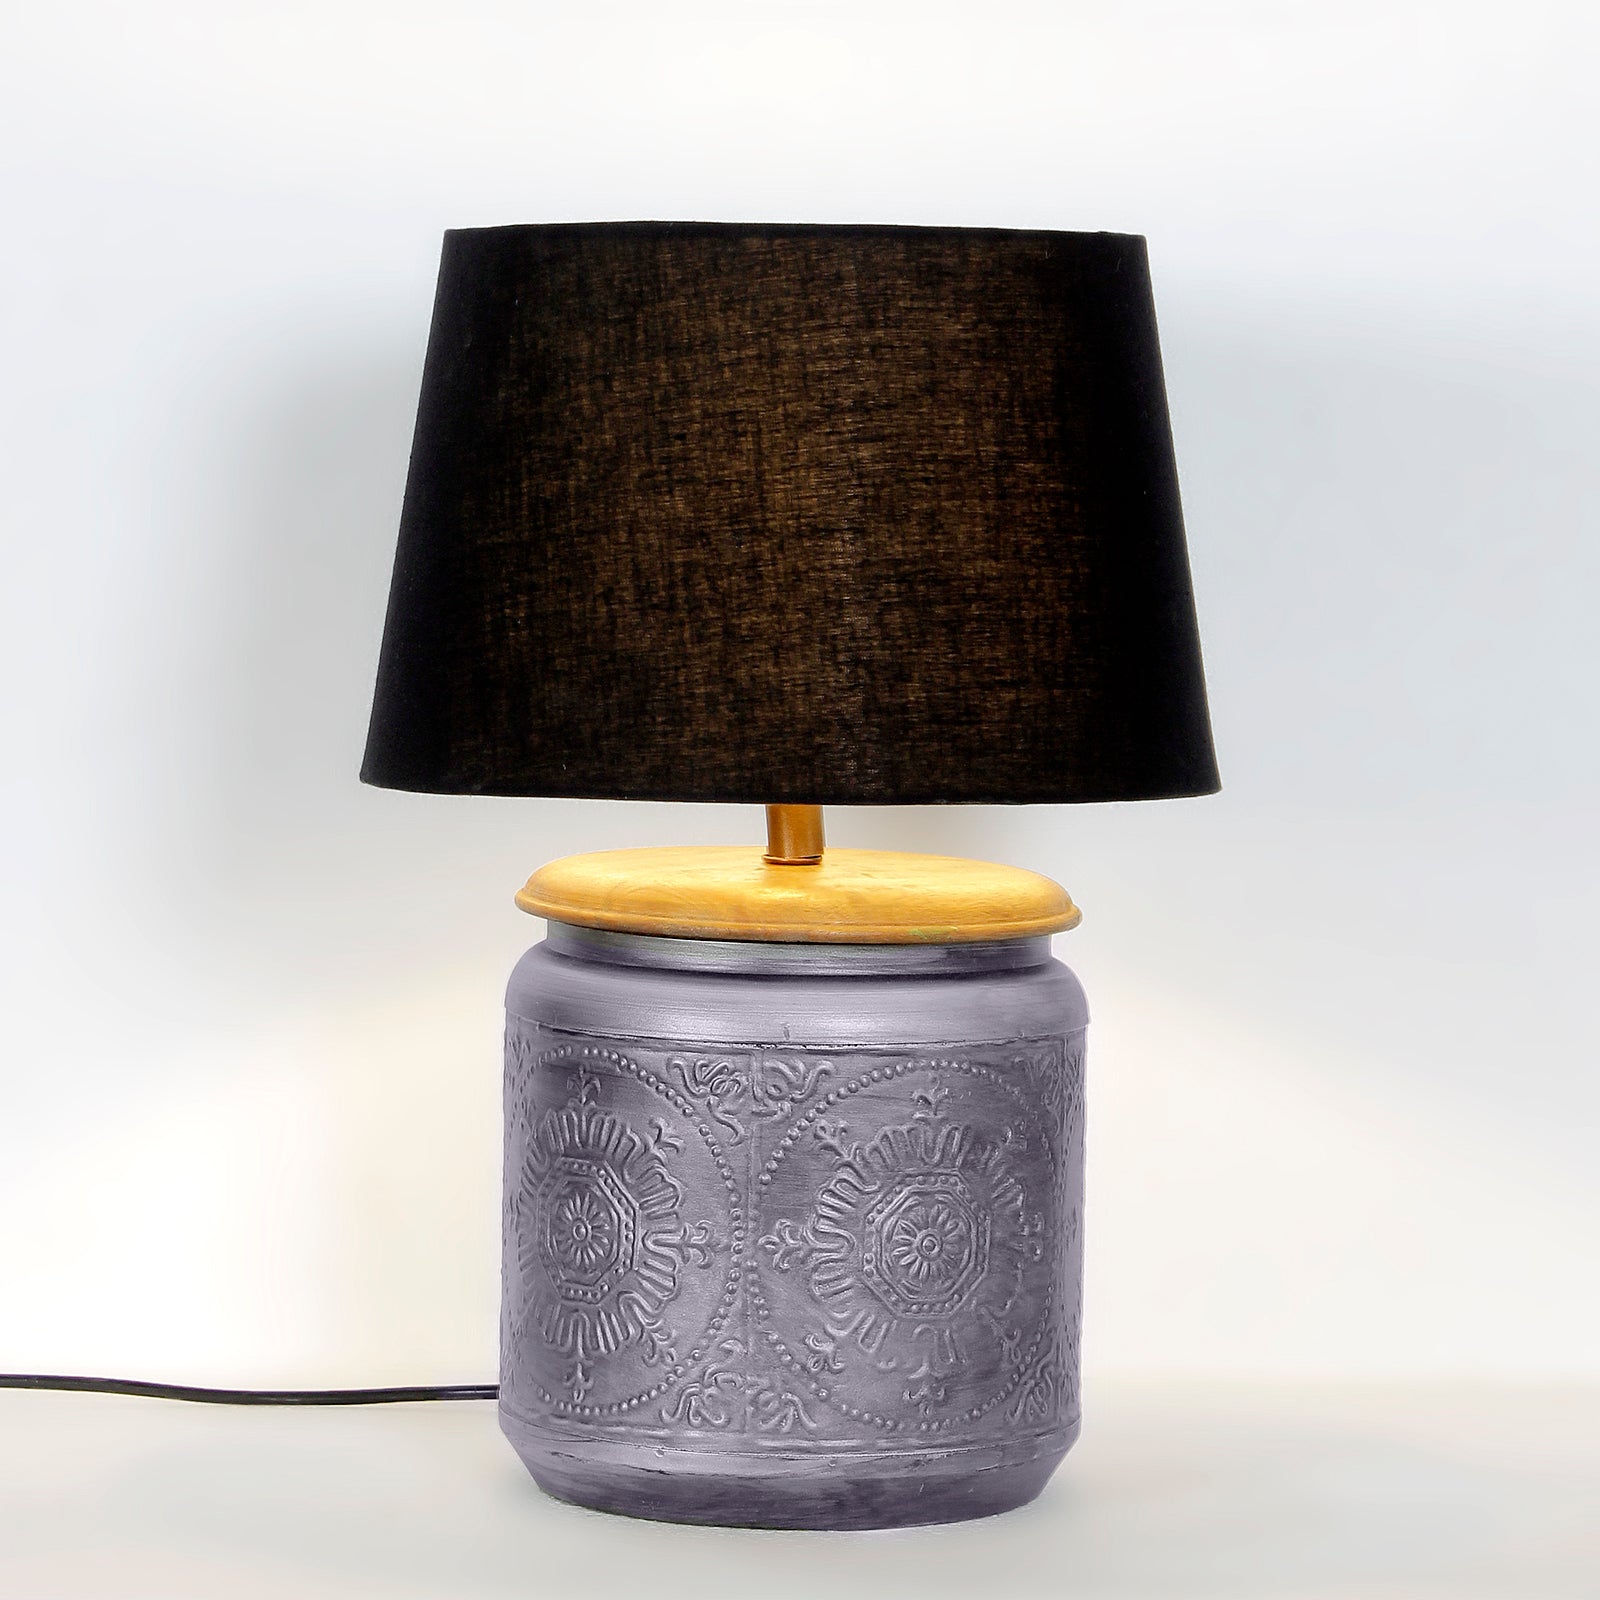 Creote Metallic Table Lamp